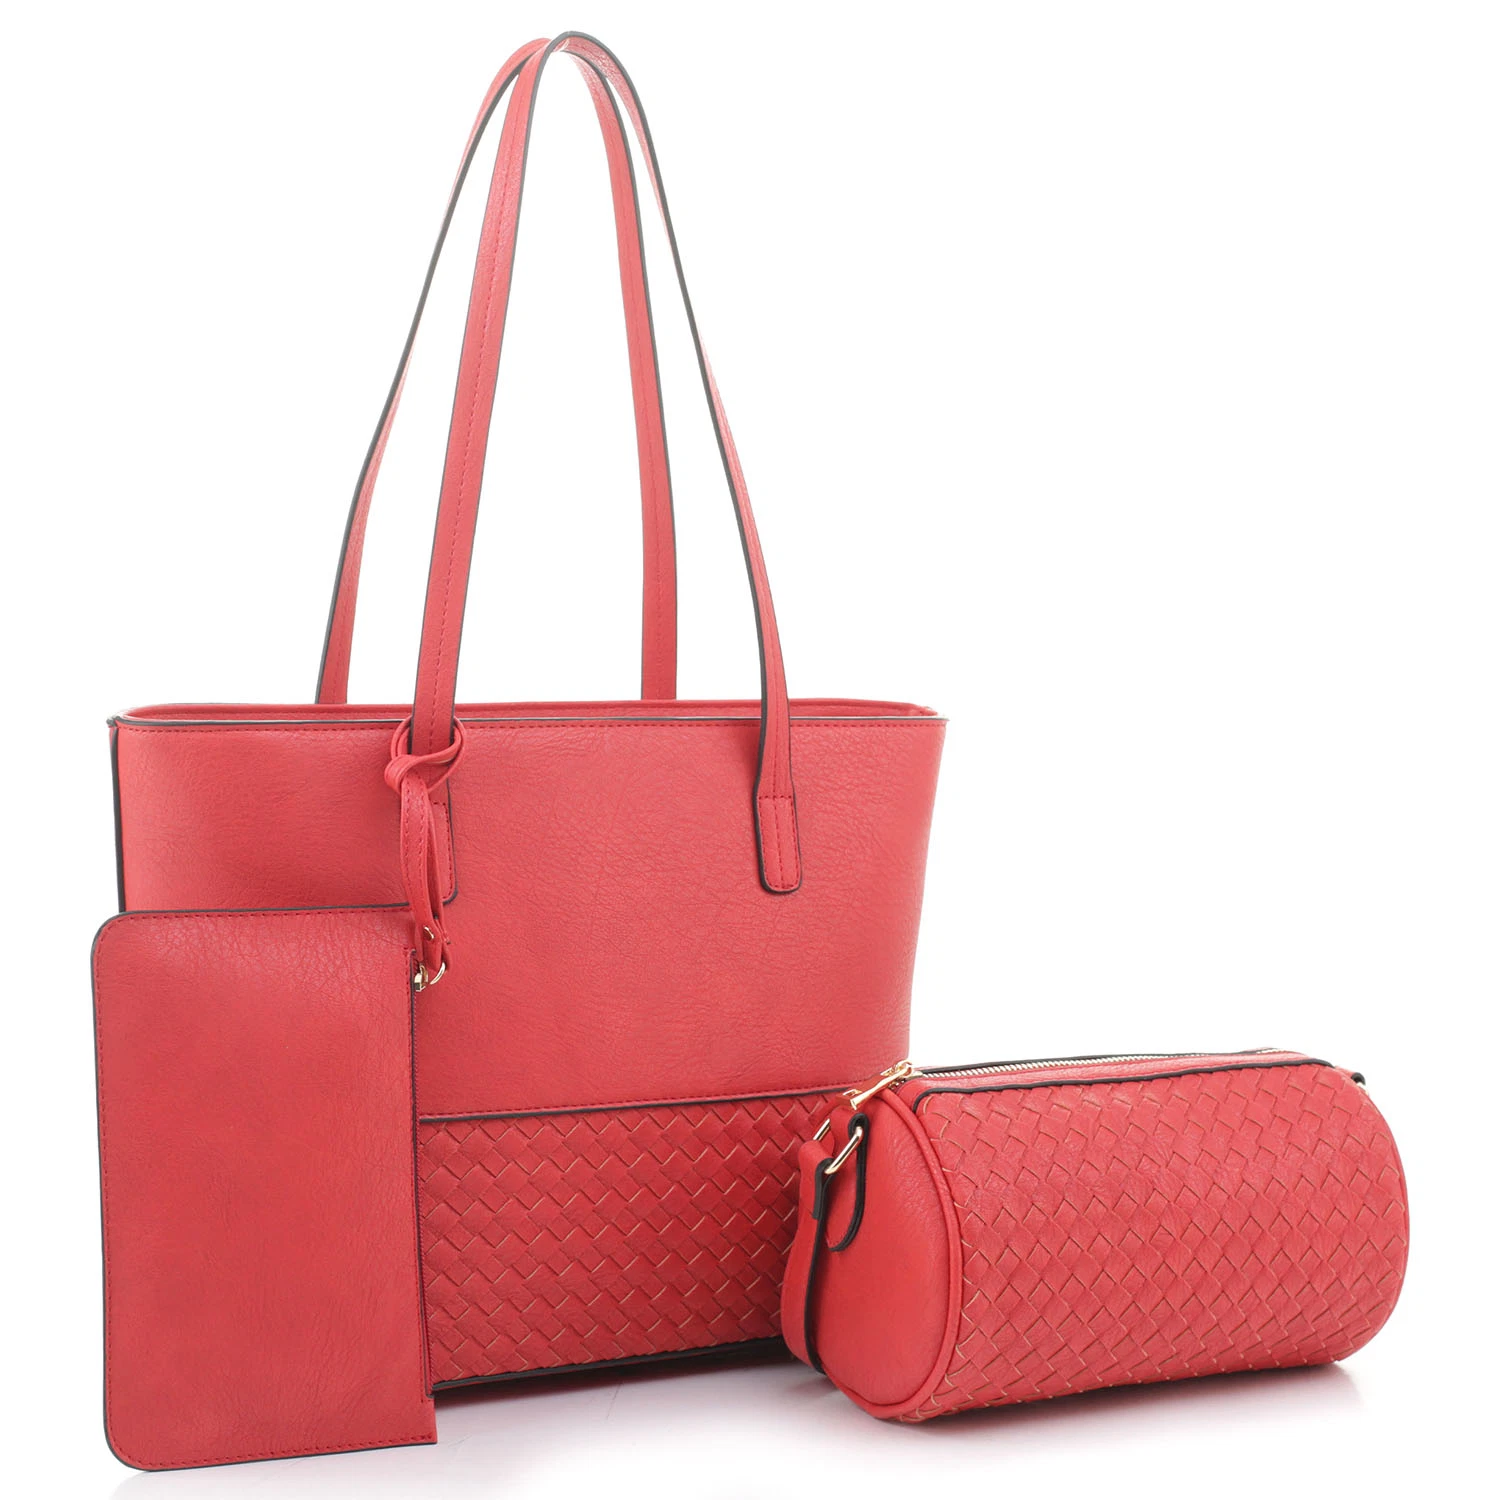 Lady Fashion PU Leather Woven 3-in-1 Shopper Set Handbag Women Tote Bag